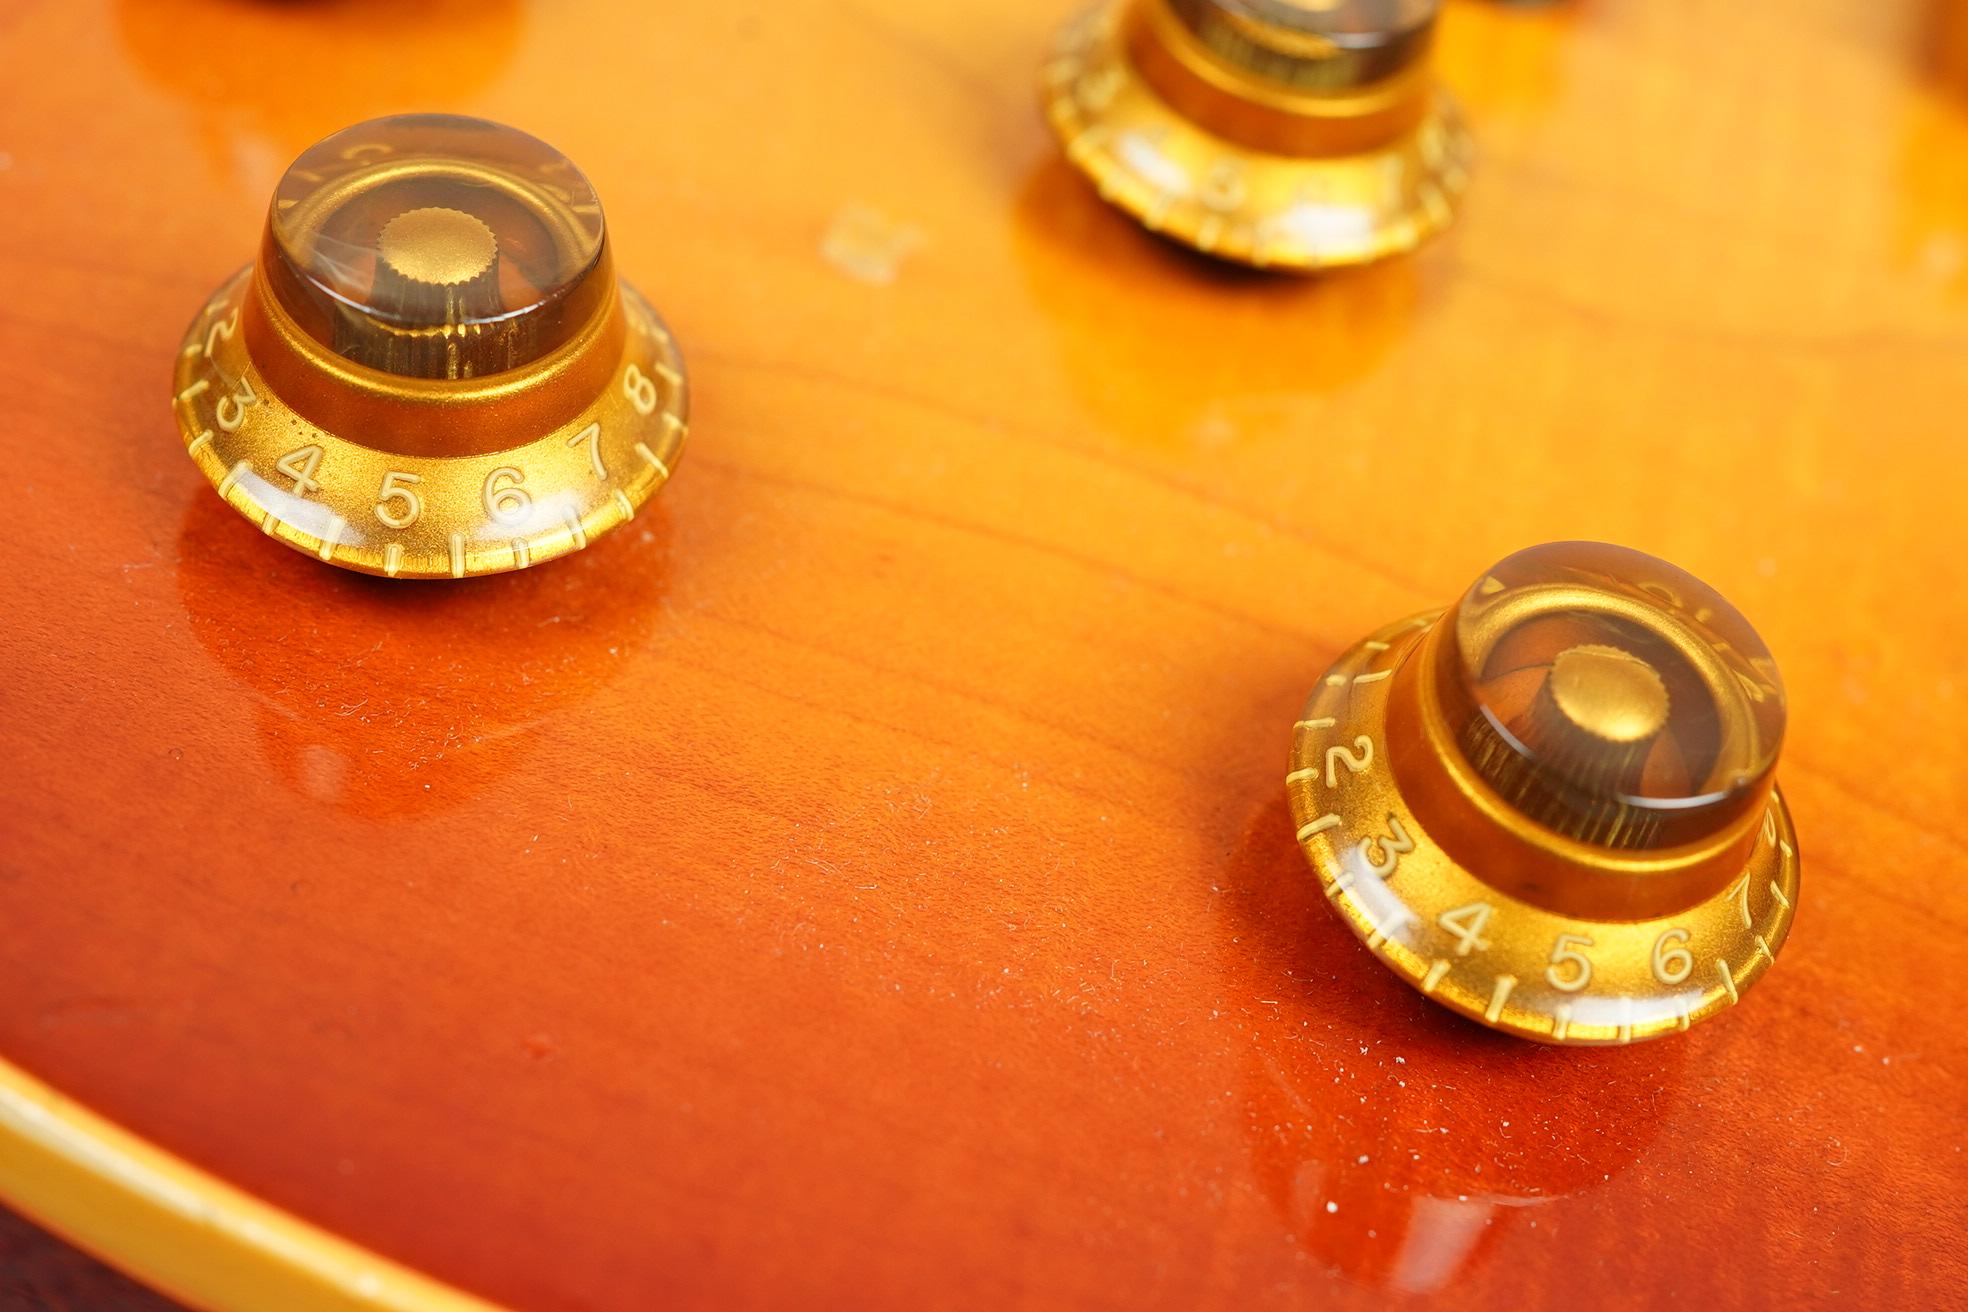 1960 Gibson Les Paul Standard 00308